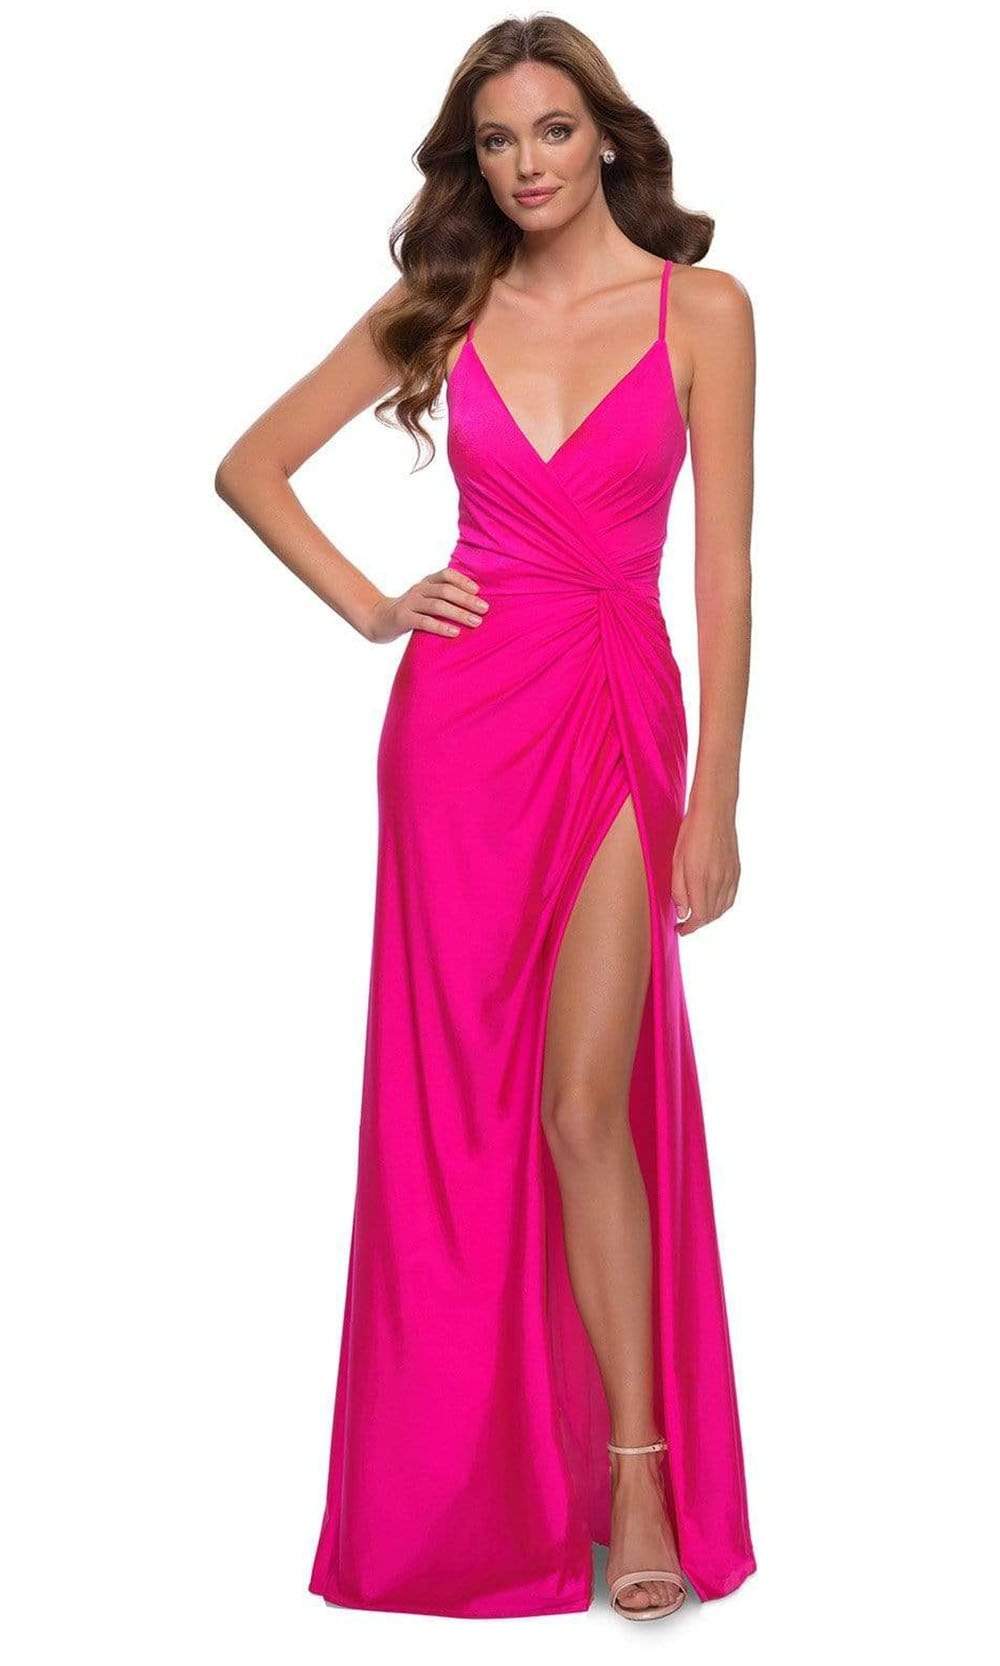 Image of La Femme - 29870 Hot Pink Taffeta Junior Prom Dress